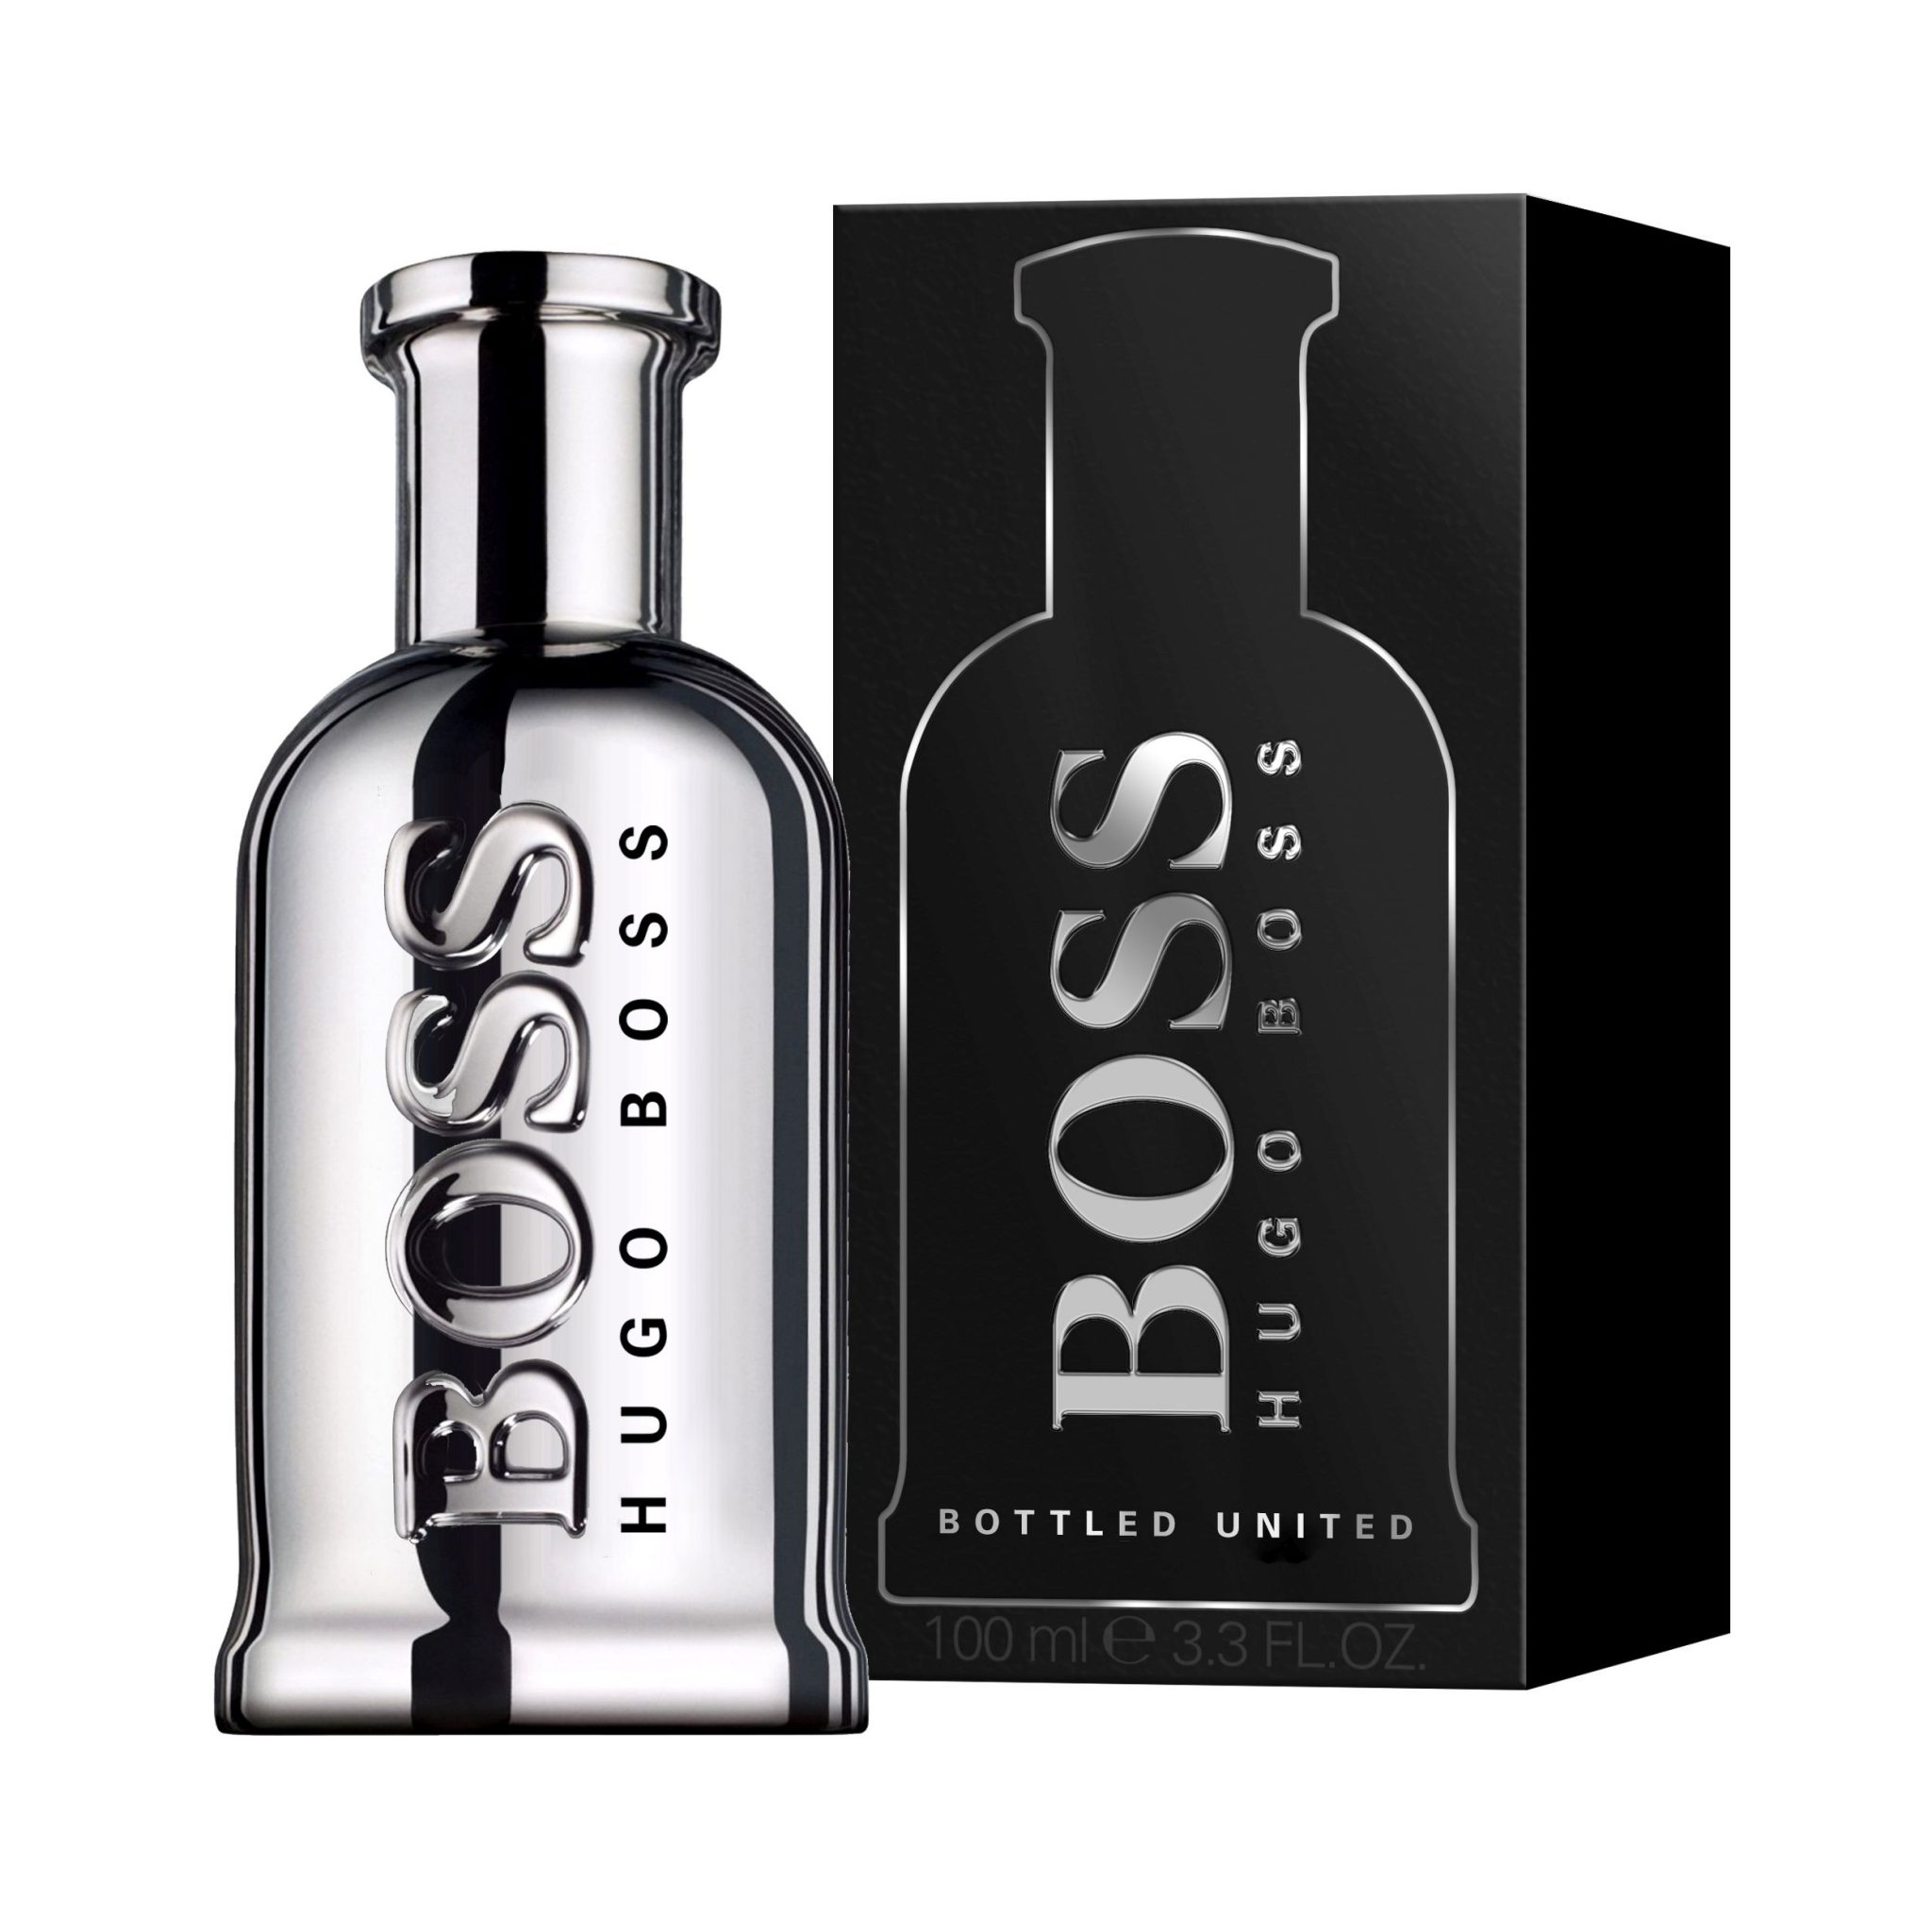 Хуго босс ботлед. Духи Hugo Boss Bottled. Туалетная вода Hugo Boss Boss Bottled United. Hugo Boss Boss Bottled [m] EDT - 100ml. Хьюго босс Ботлед мужские 100 мл.